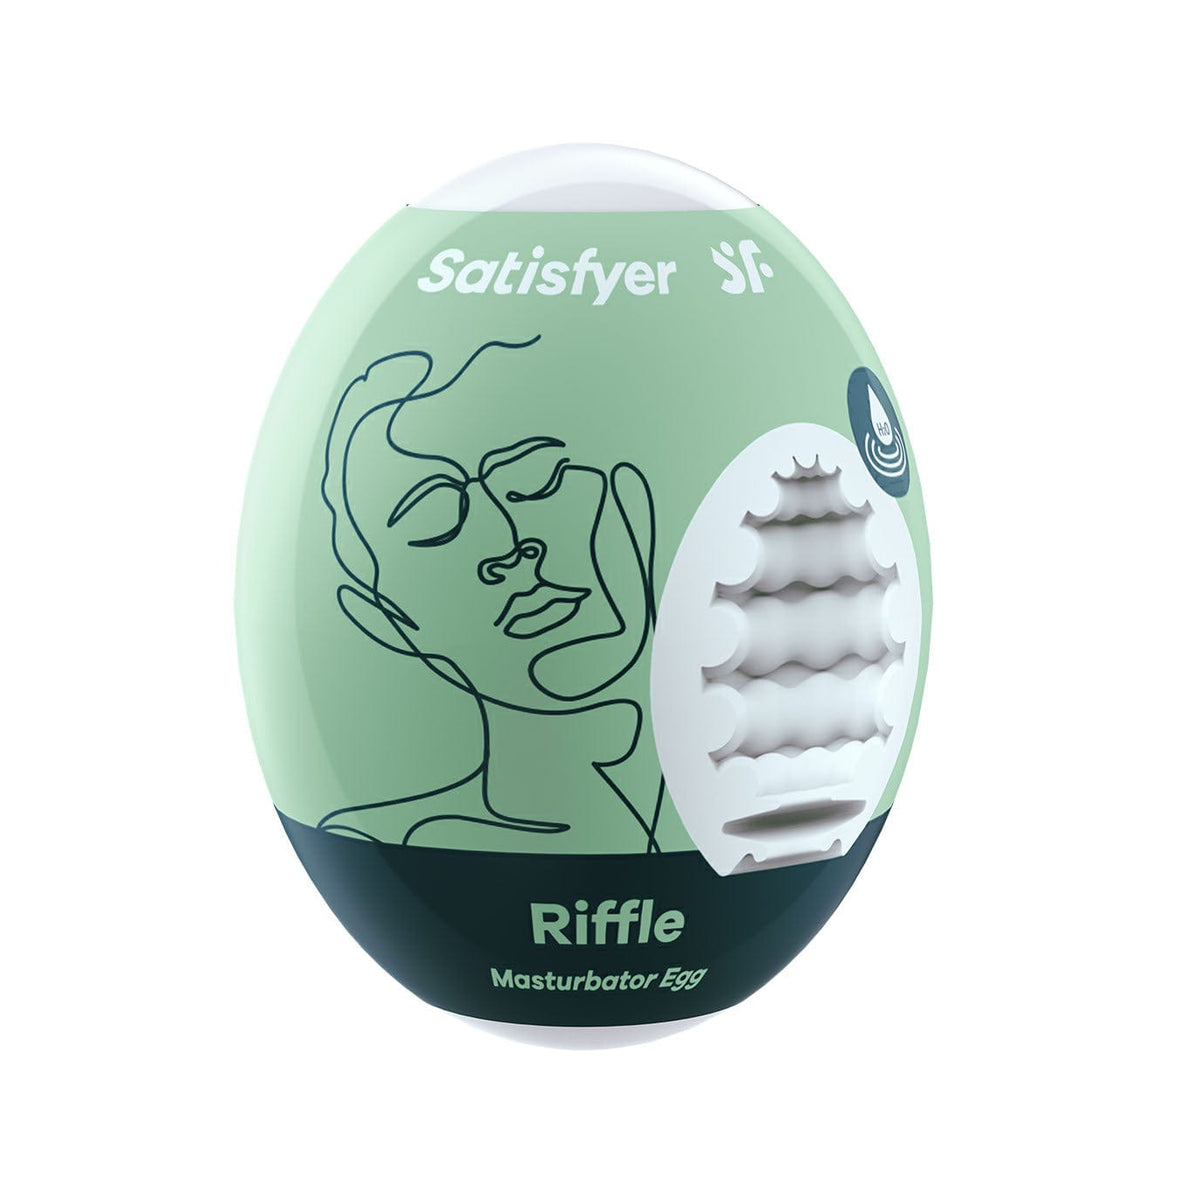 Satisfyer - Riffle Masturbator Egg (Green) -  Masturbator Egg (Non Vibration)  Durio.sg